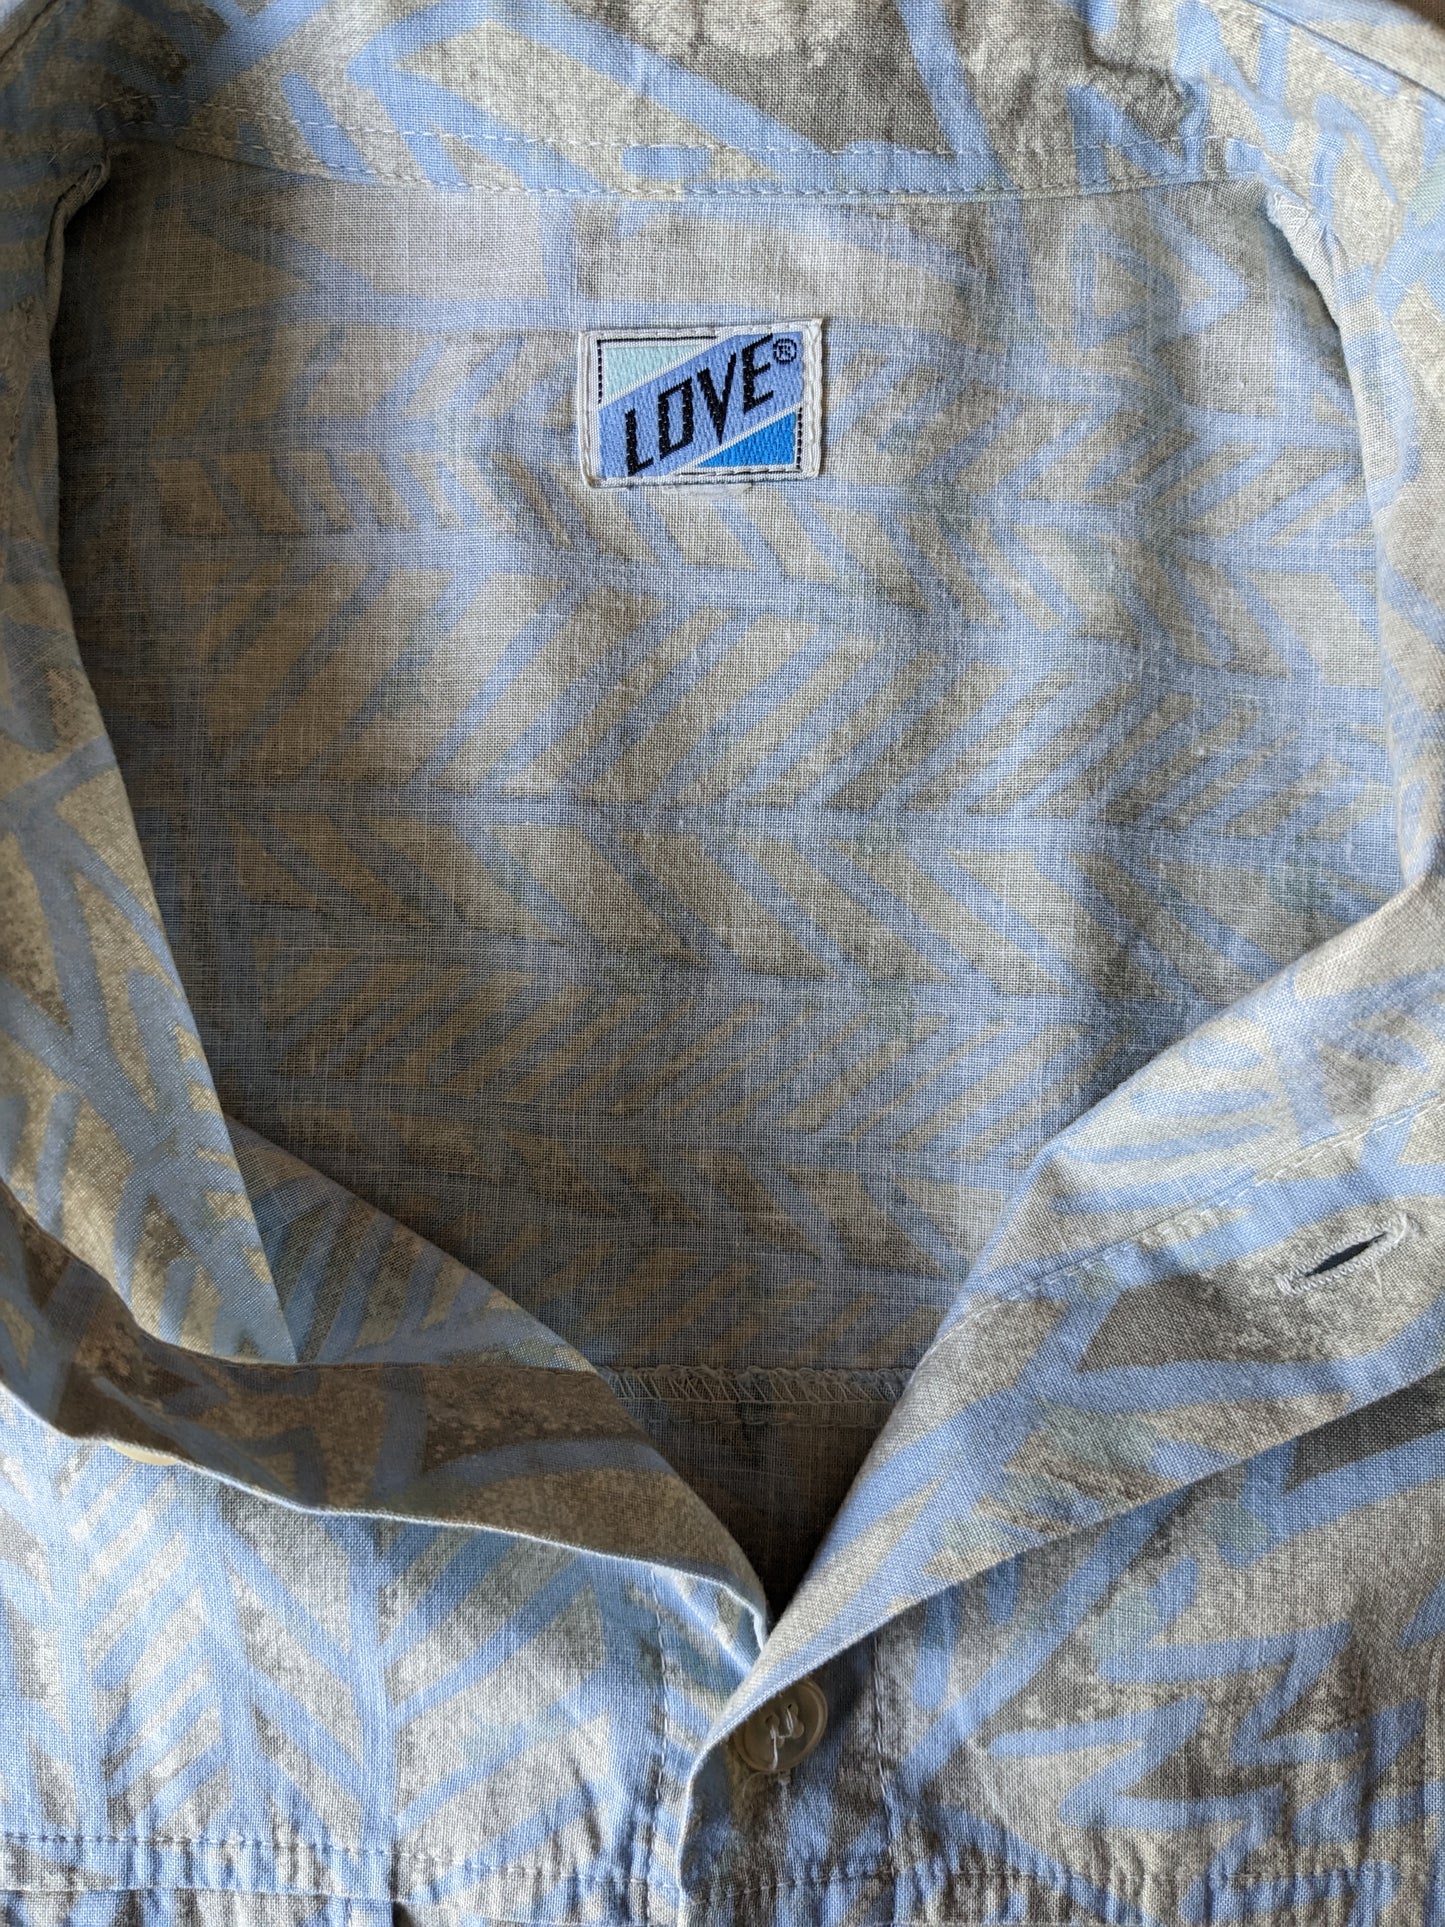 Camisa de amor vintage manga corta. Impresión verde azul. Talla L.